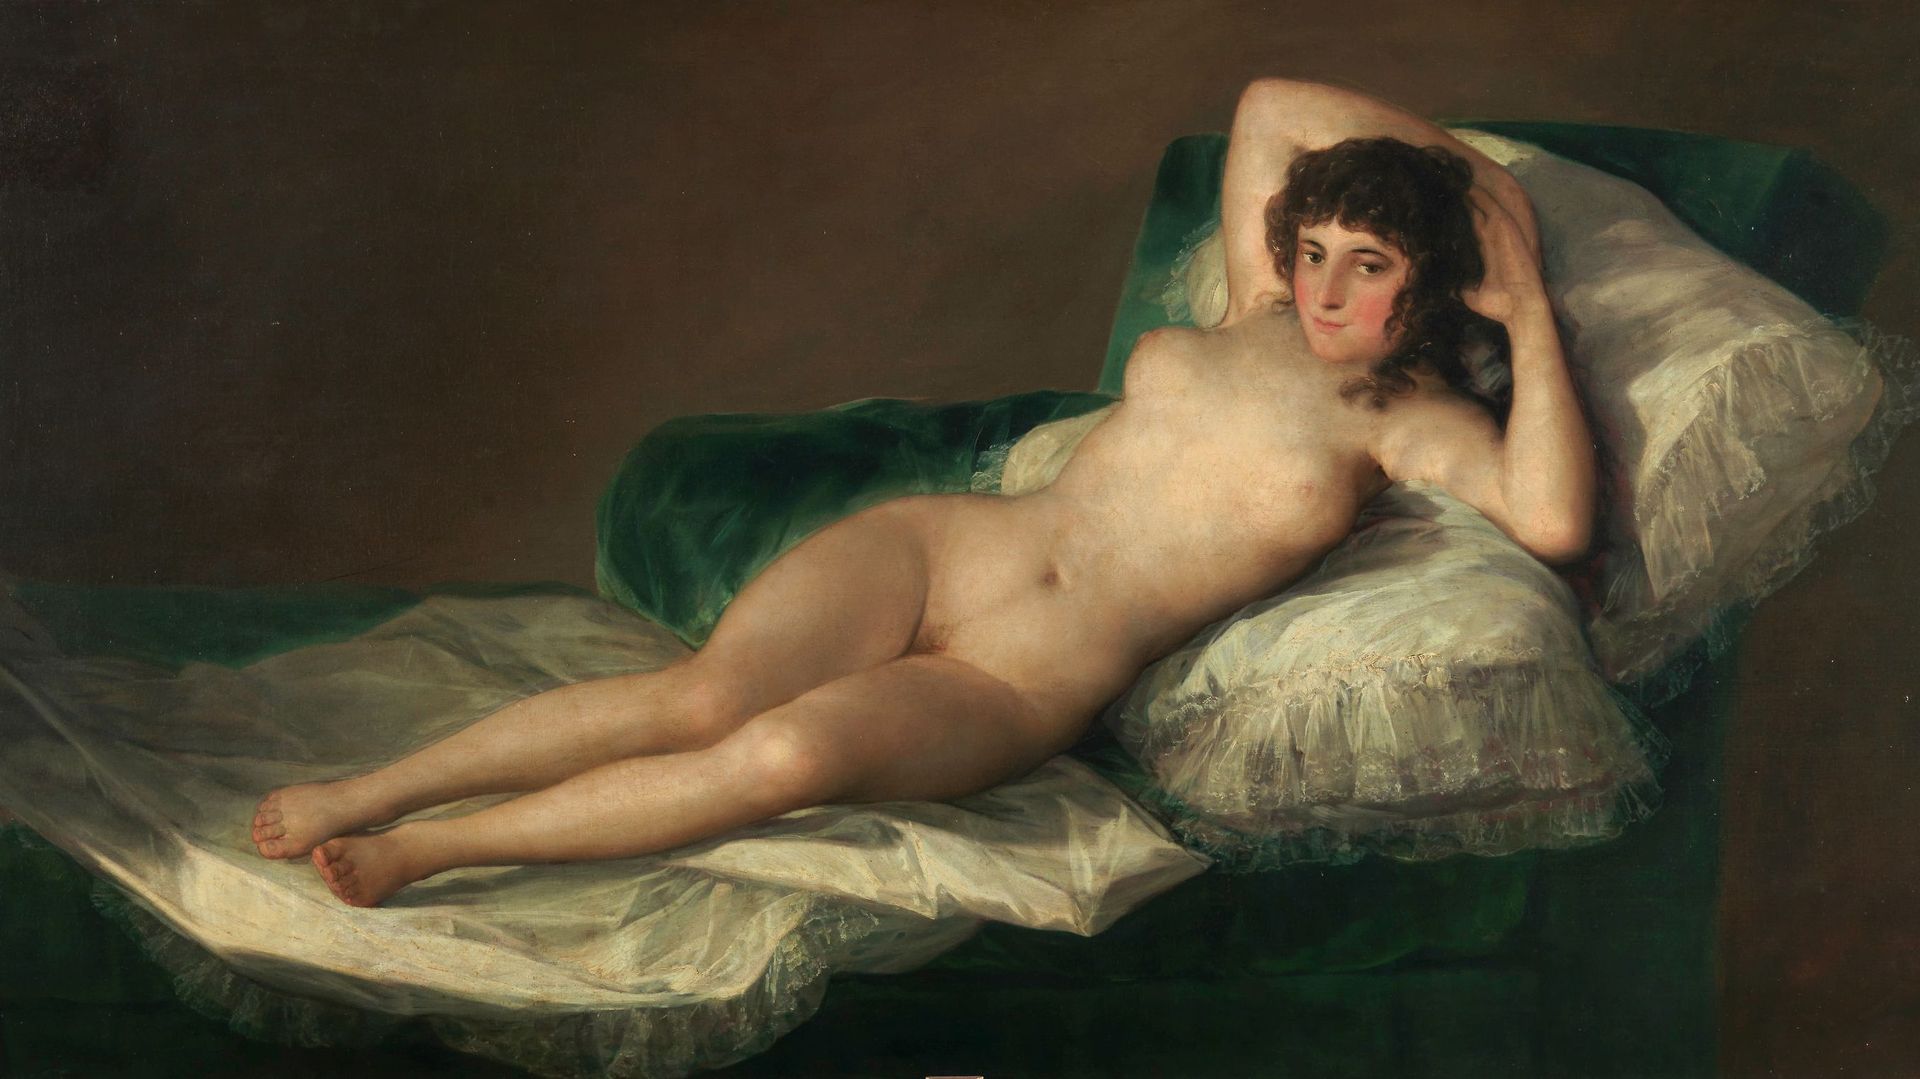 Maja nue, de Goya